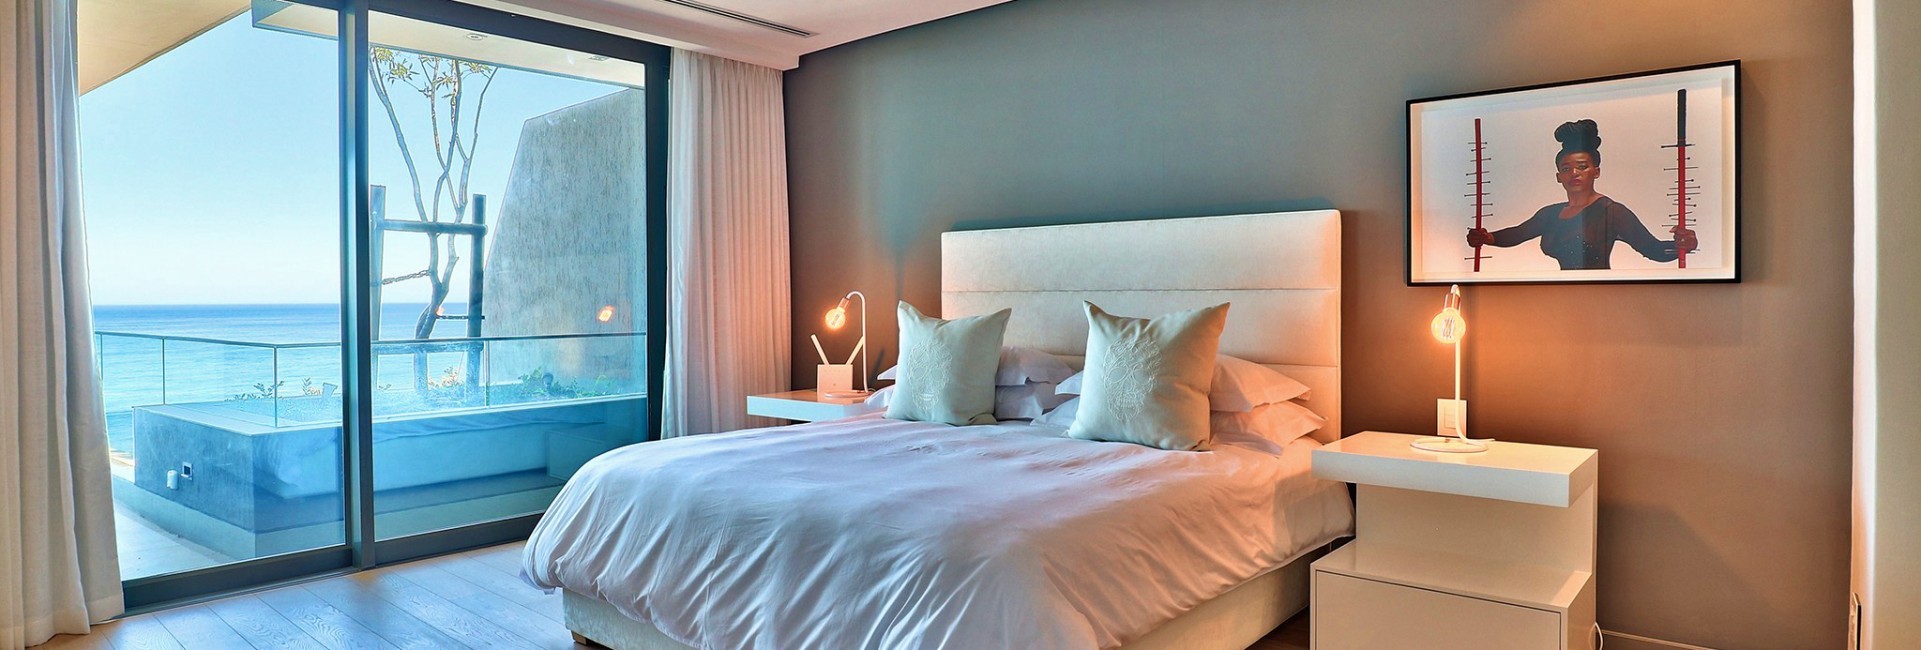 SouthAfrica:CapeTown:CliftonTerraces_ApartmentAzure:bedroom.jpg